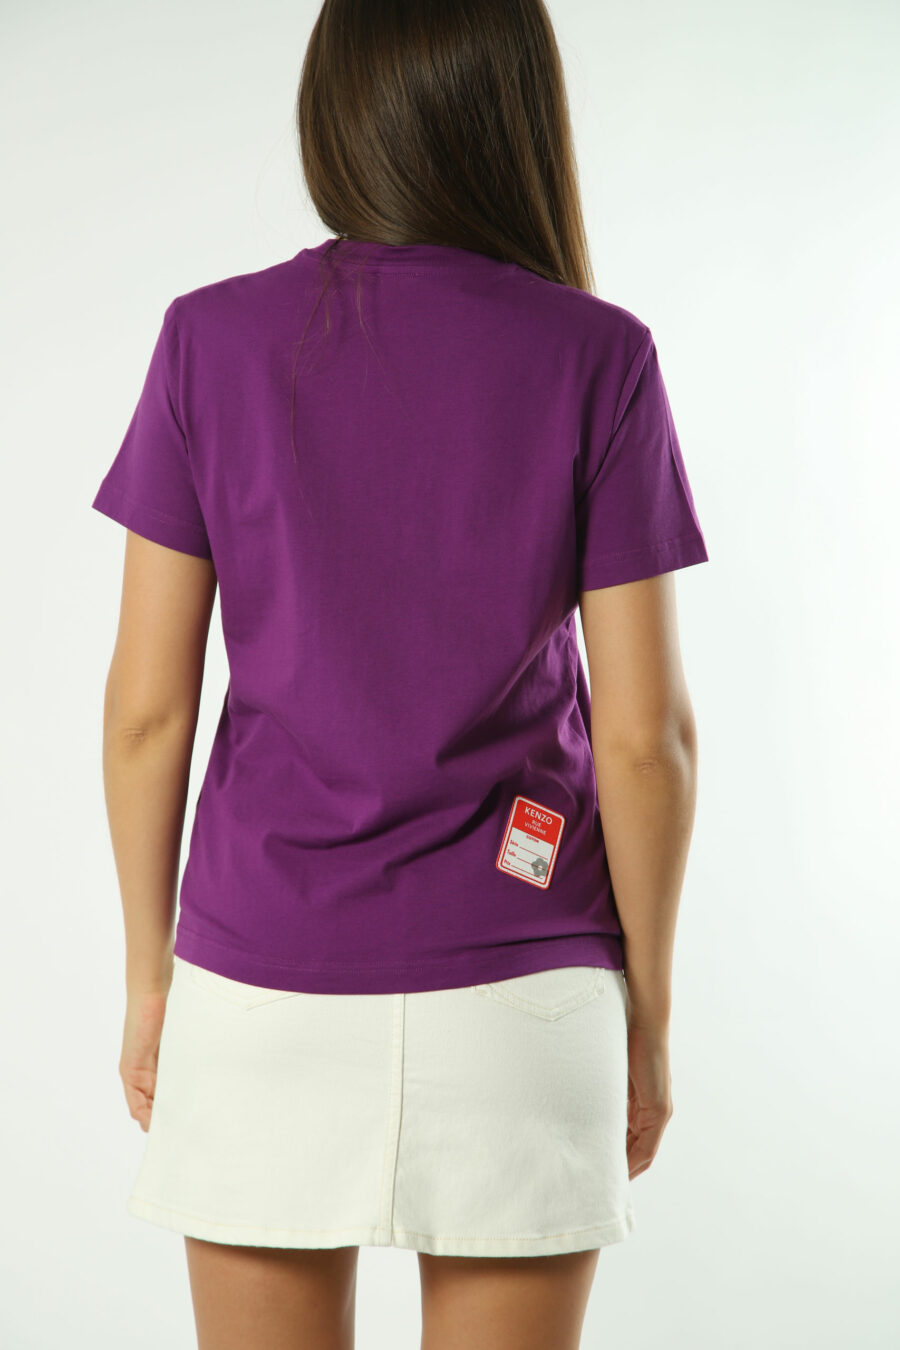 Camiseta violeta con maxilogo "rue vivienne" blanco - Photos 1359